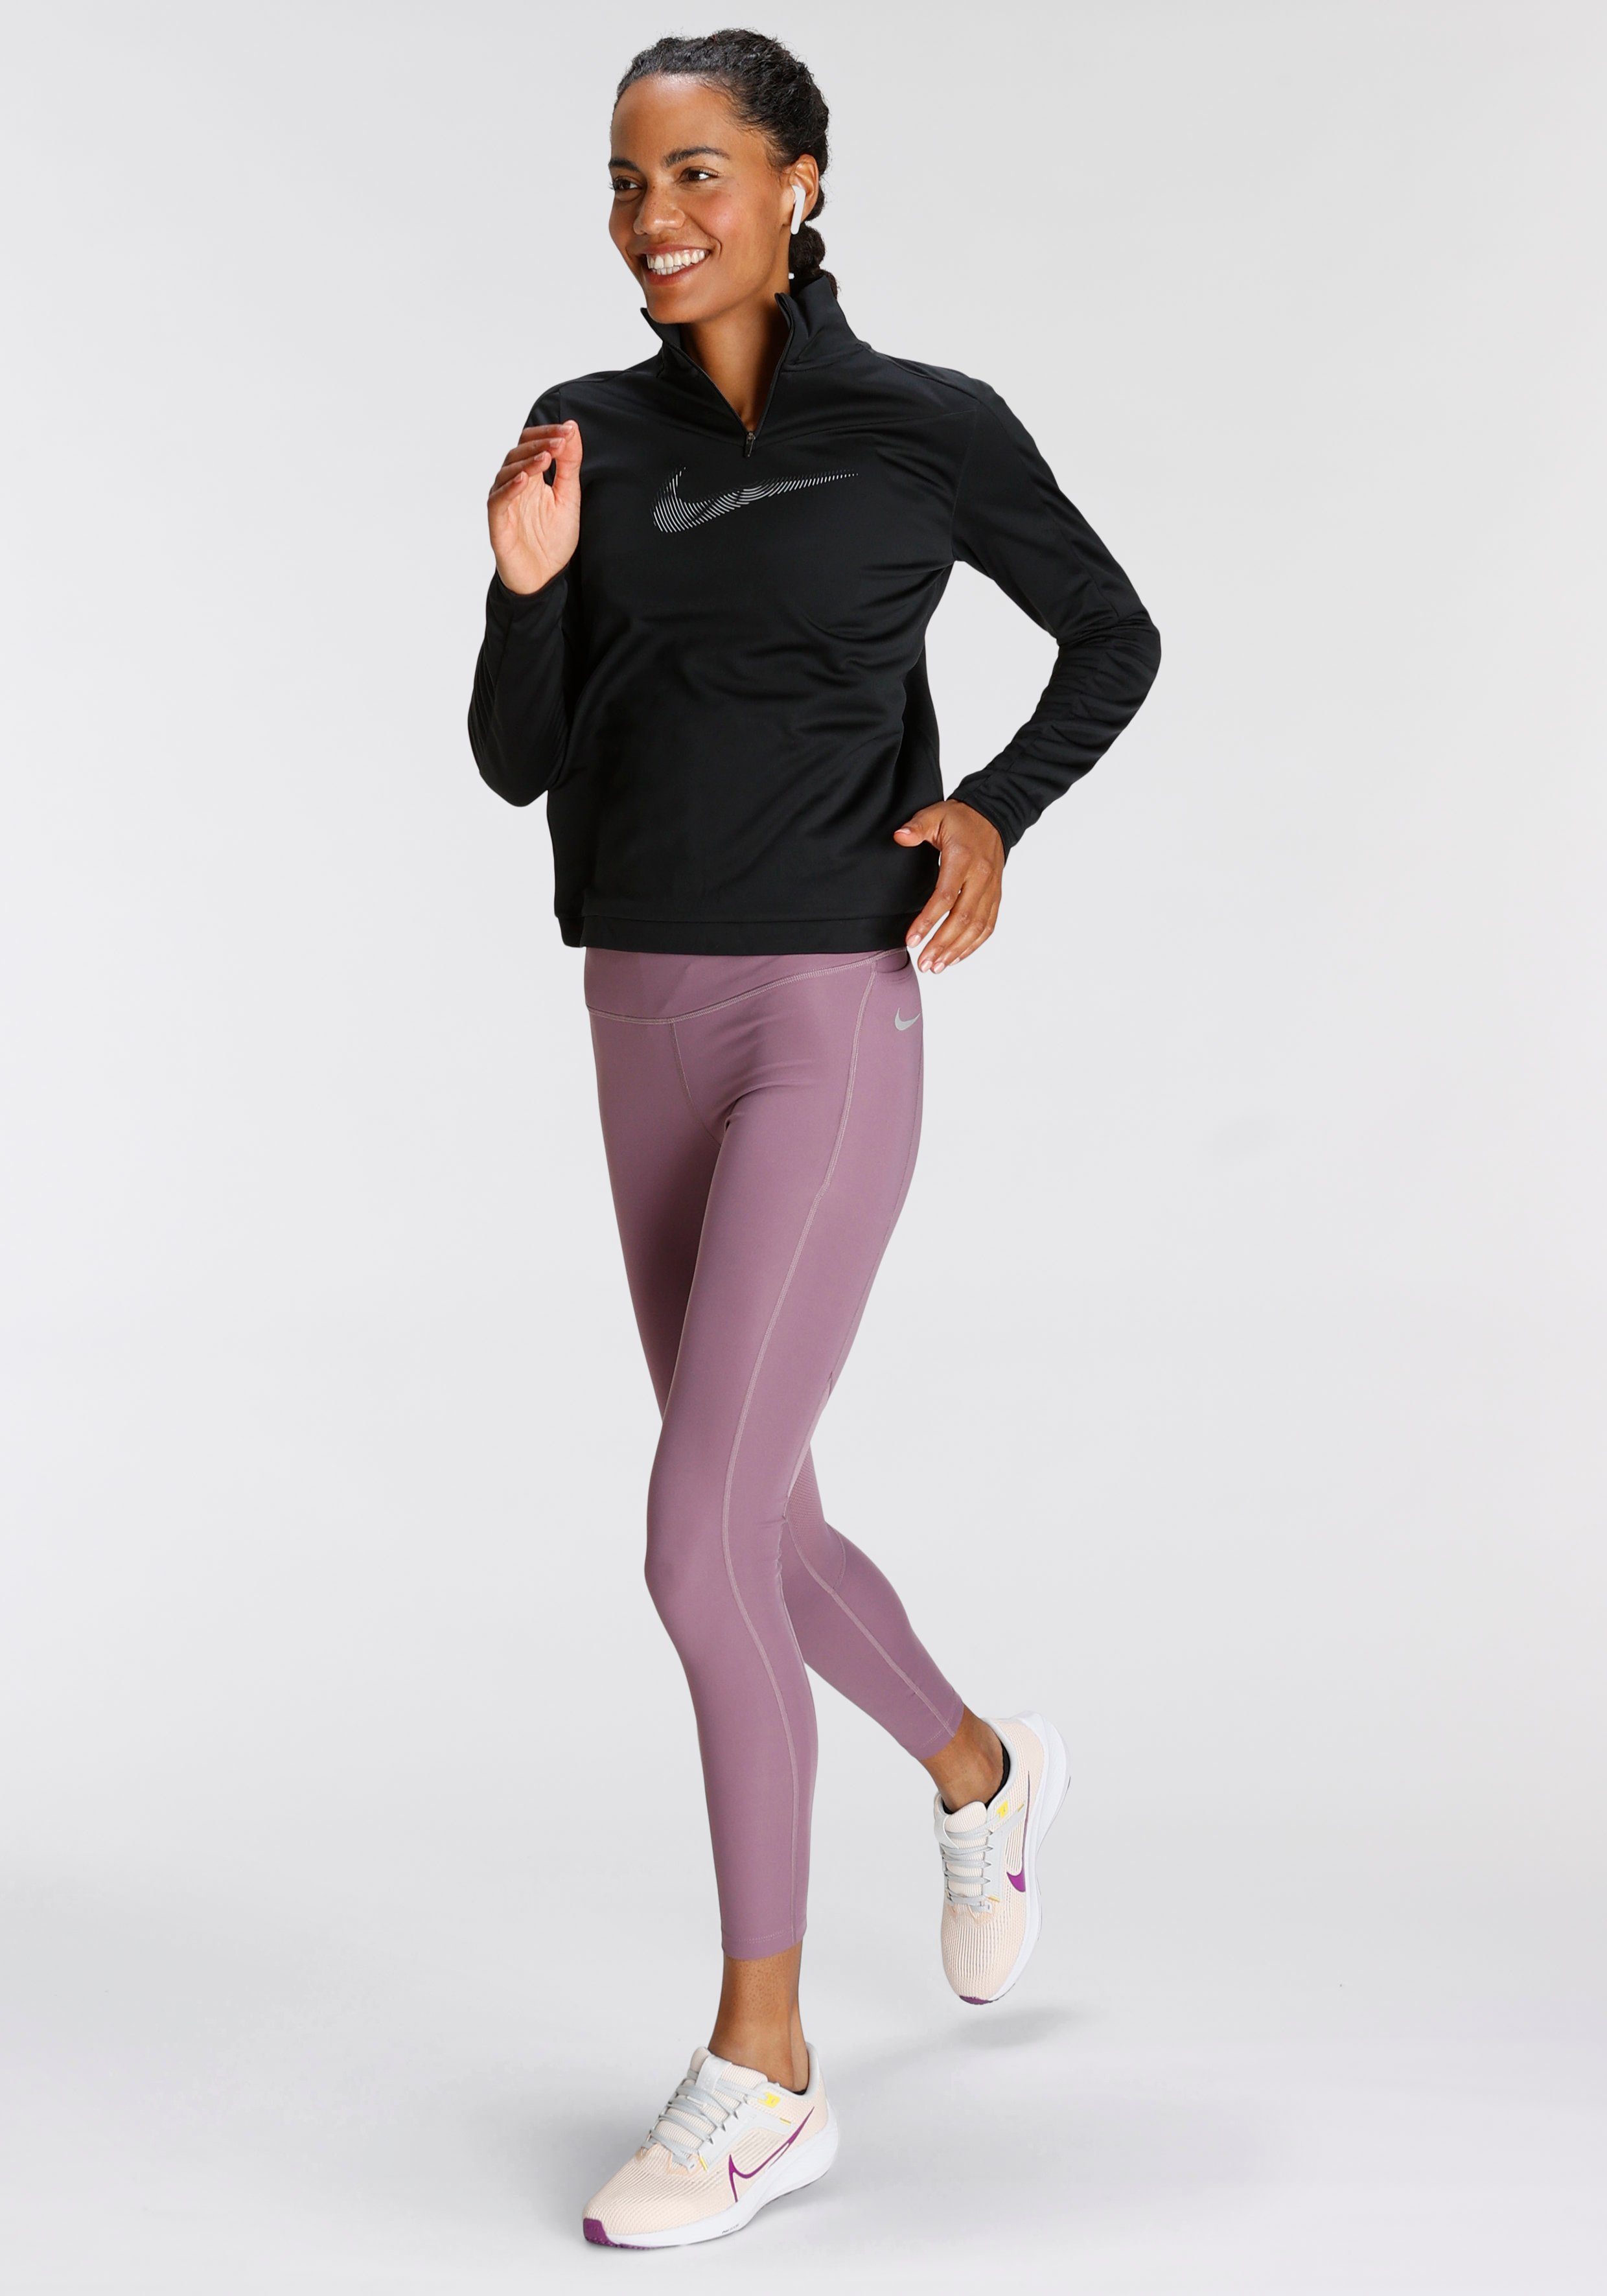 LEGGINGS Nike DUST/REFLECTIVE MID-RISE SILV WOMEN'S FAST VIOLET RUNNING EPIC POCKET Lauftights